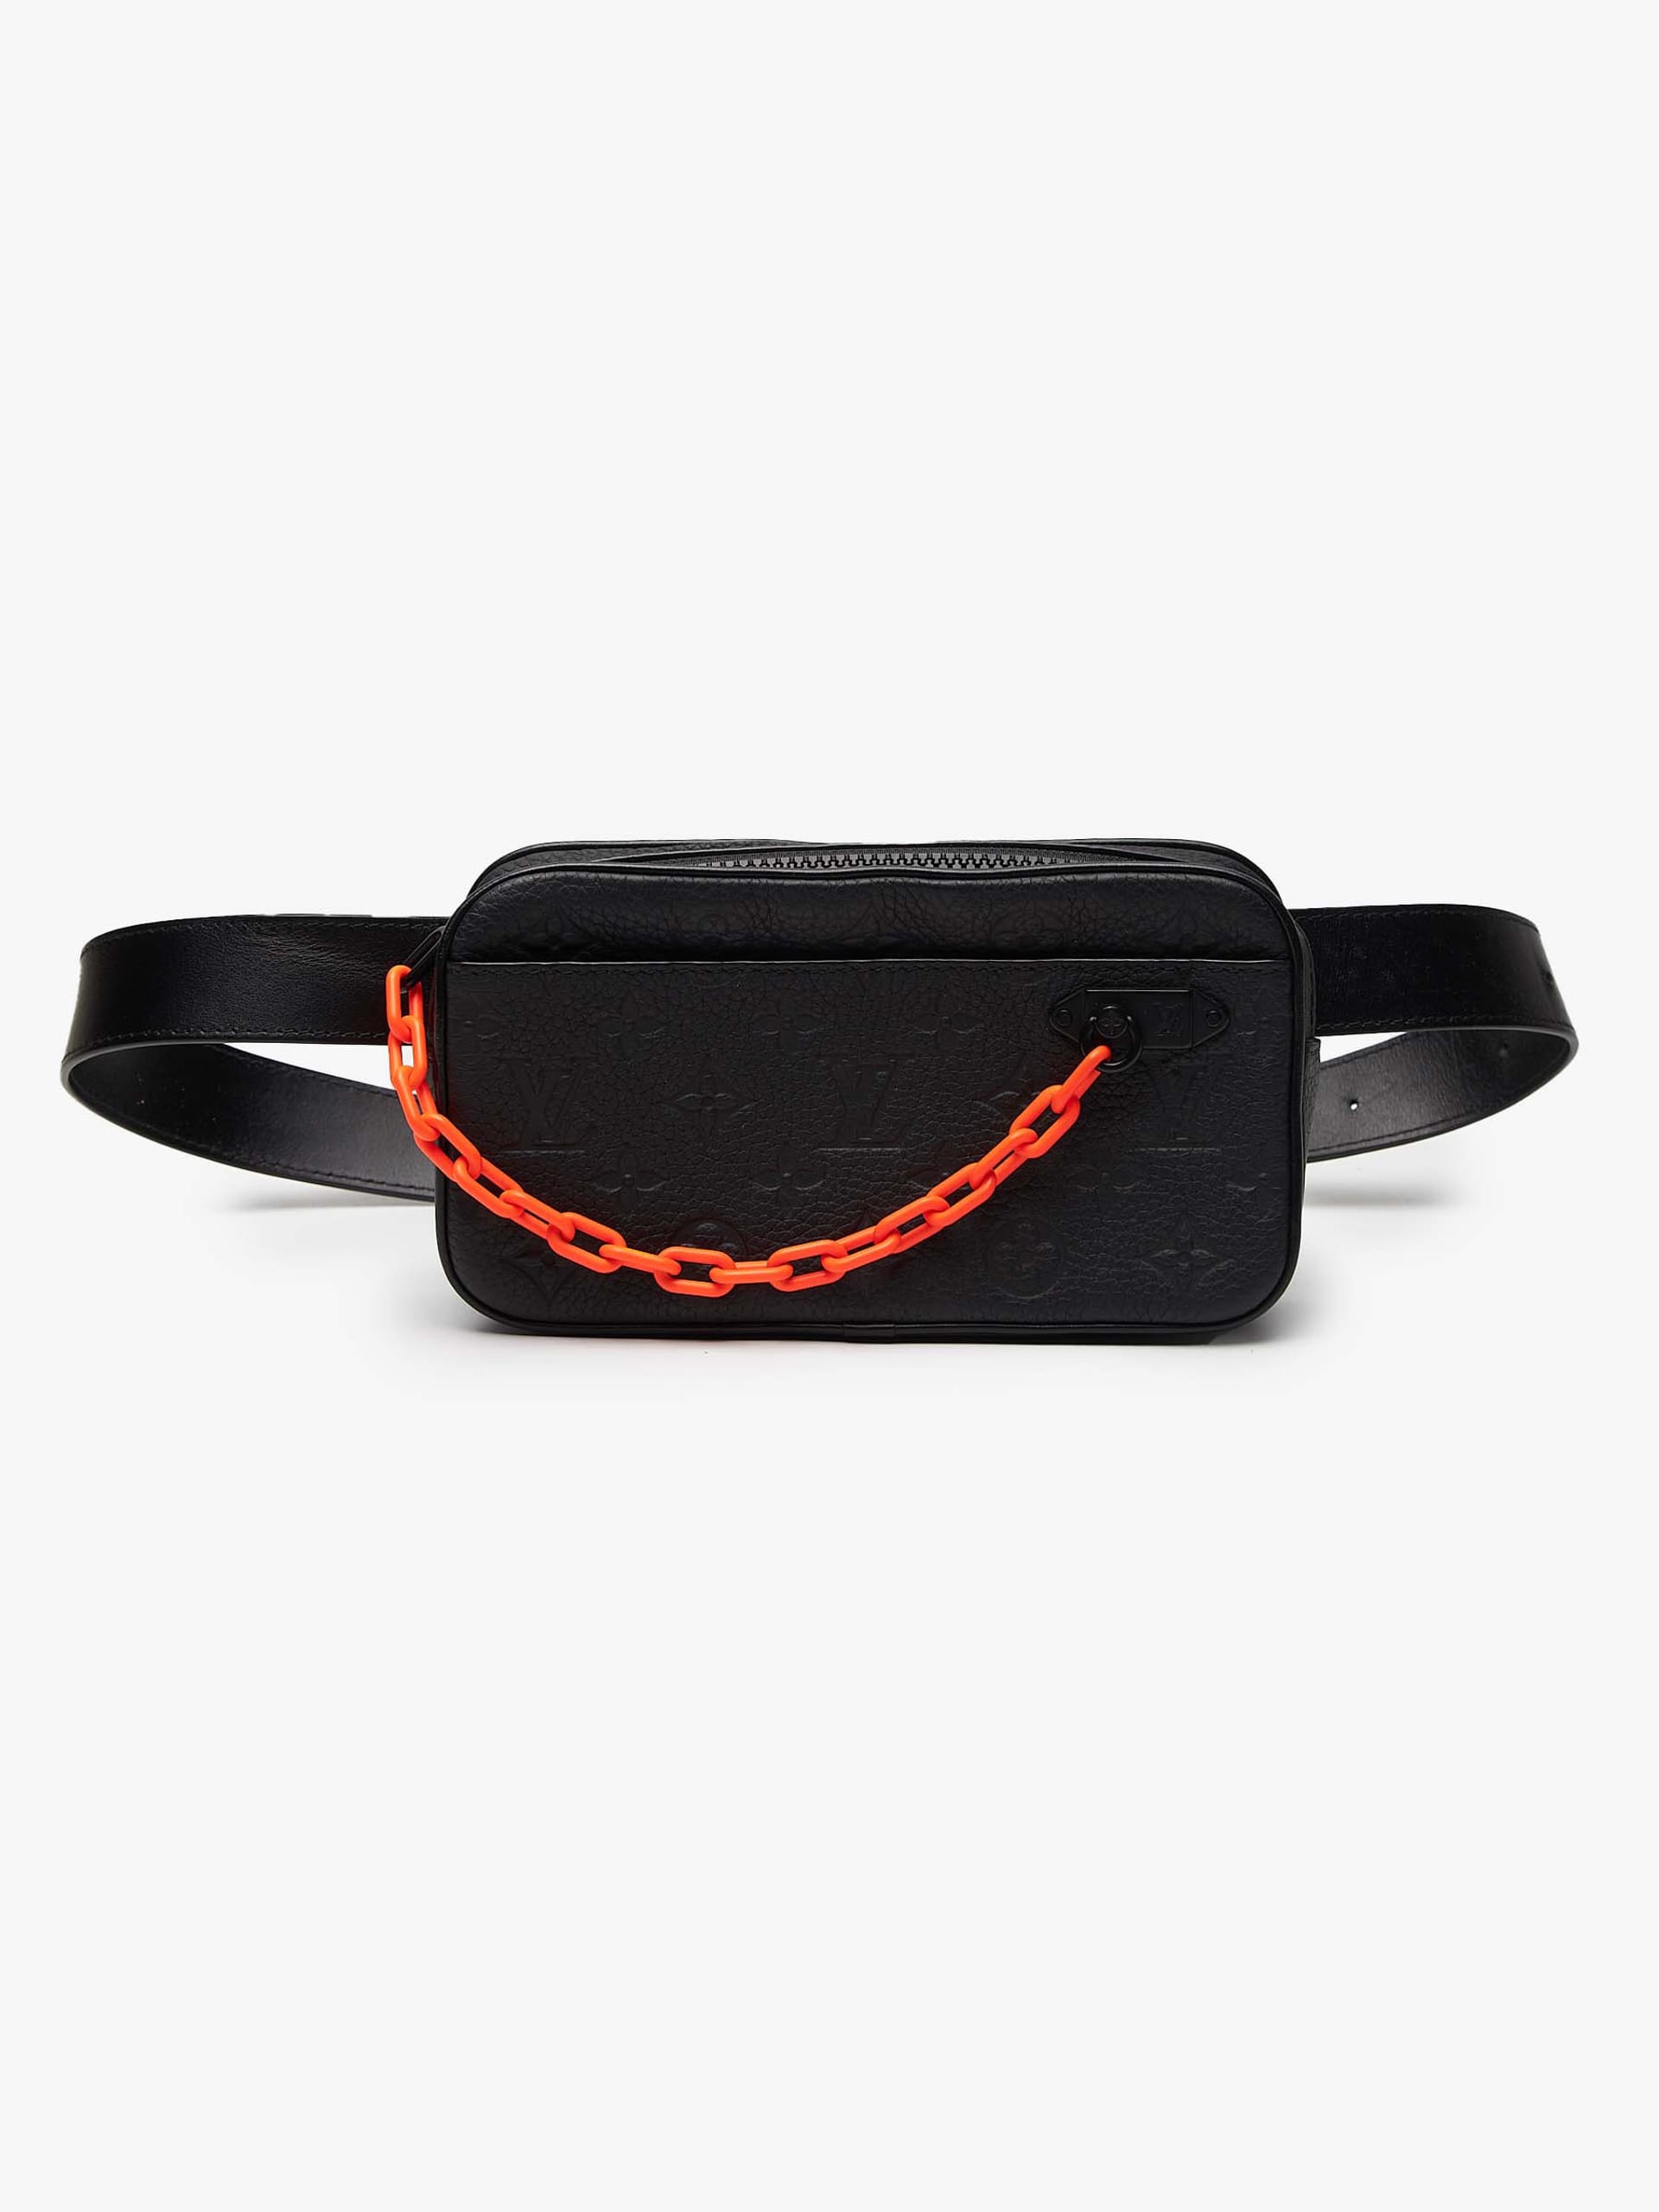 Black Lv Bag With Orange Chain